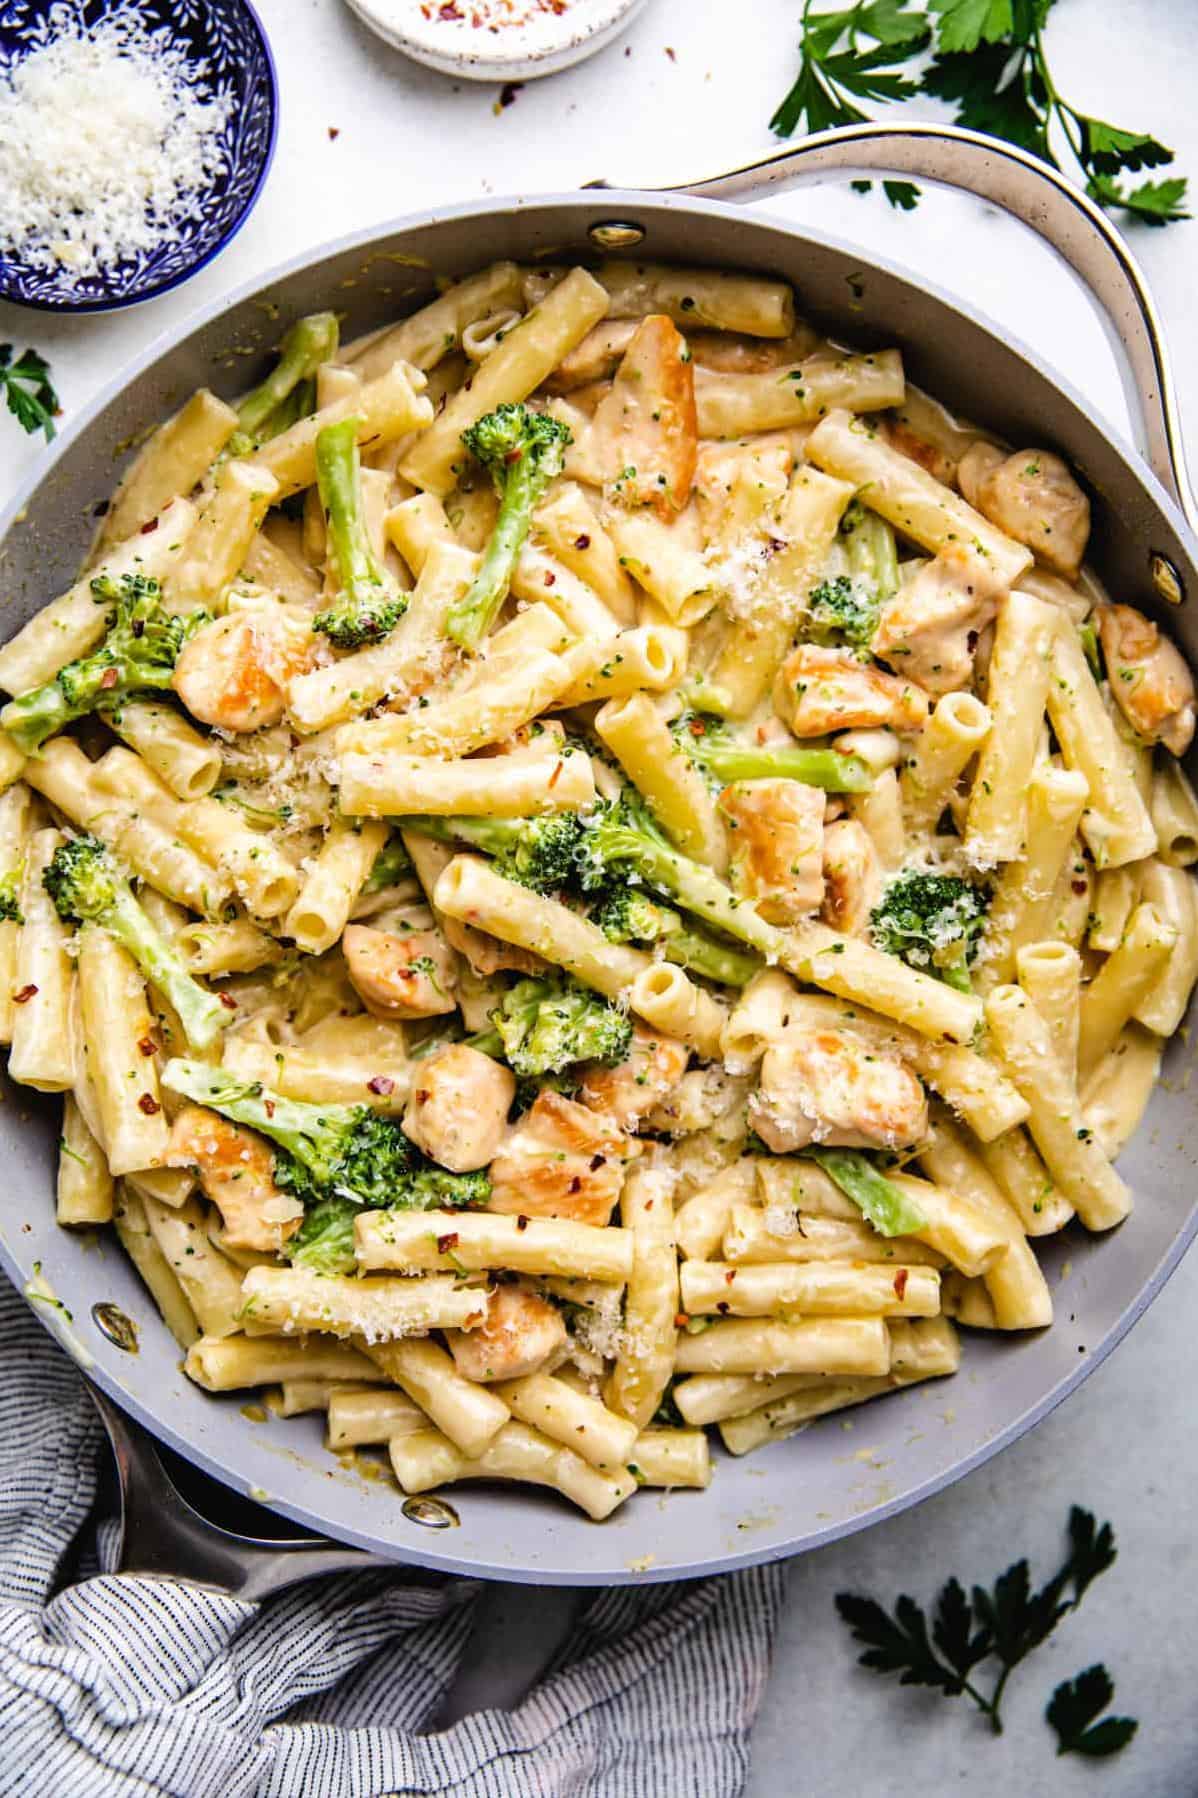 Ziti, Chicken and Broccoli